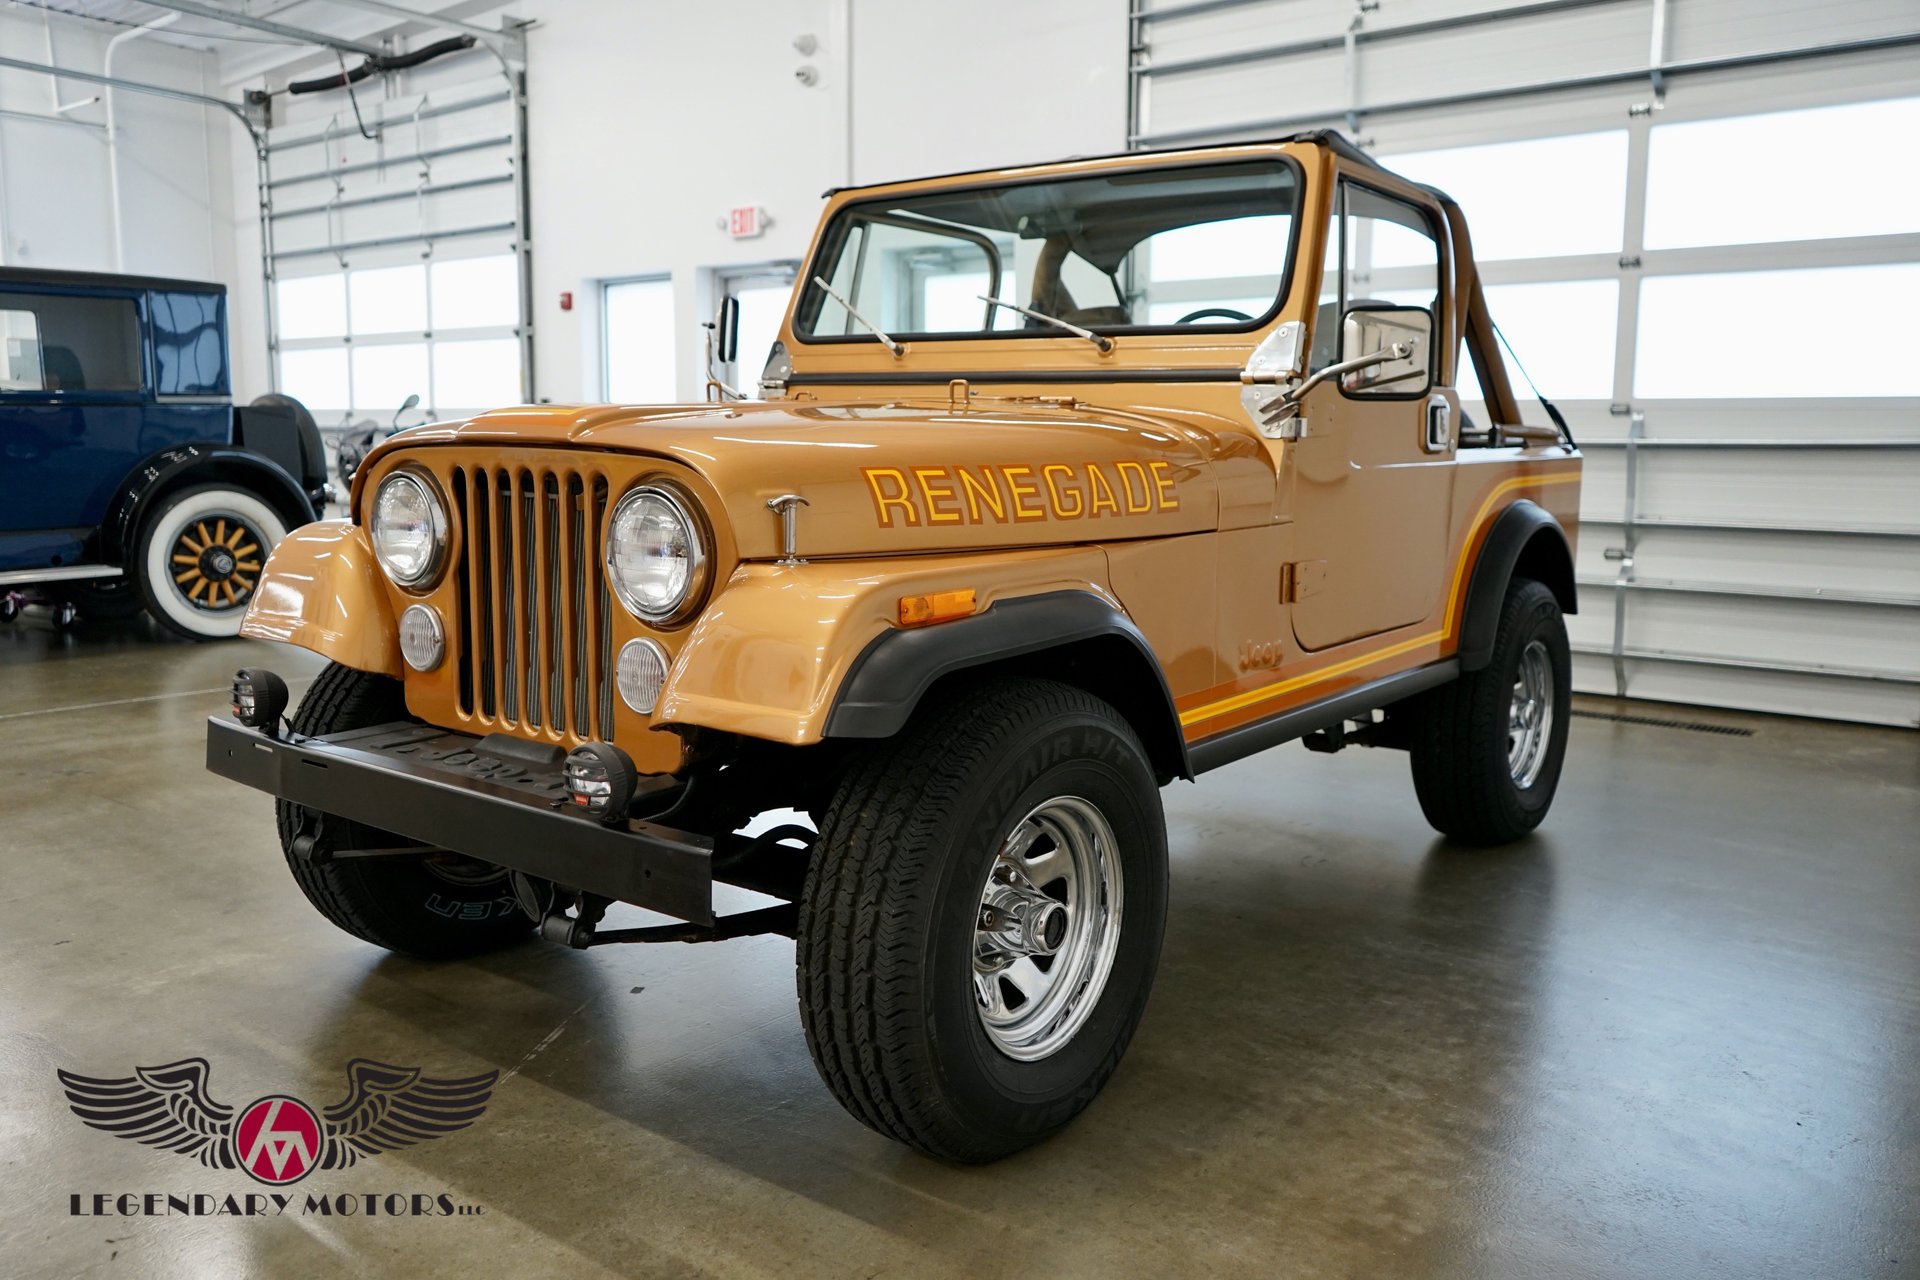 1986 Jeep CJ7 | Legendary Motors - Classic Cars, Muscle Cars, Hot Rods &  Antique Cars - Rowley, MA